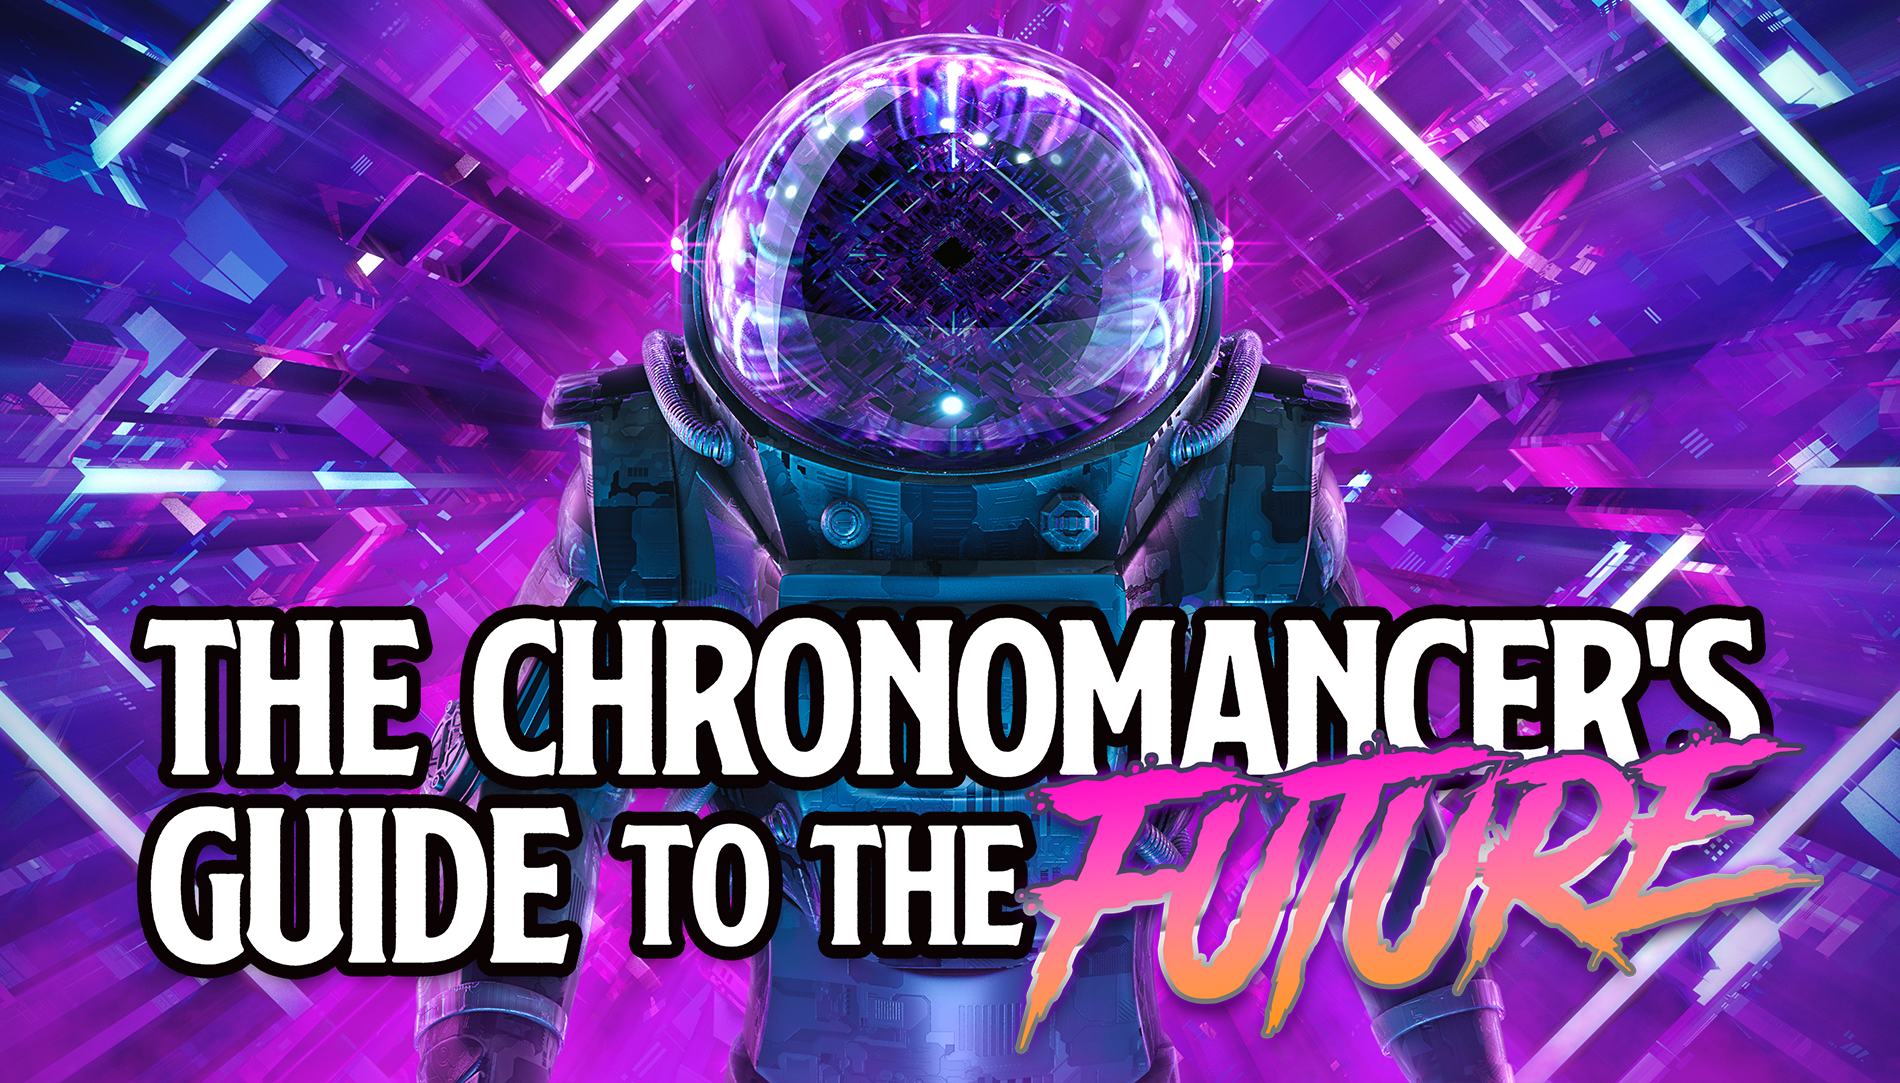 The Chronomancer's Guide to the Future